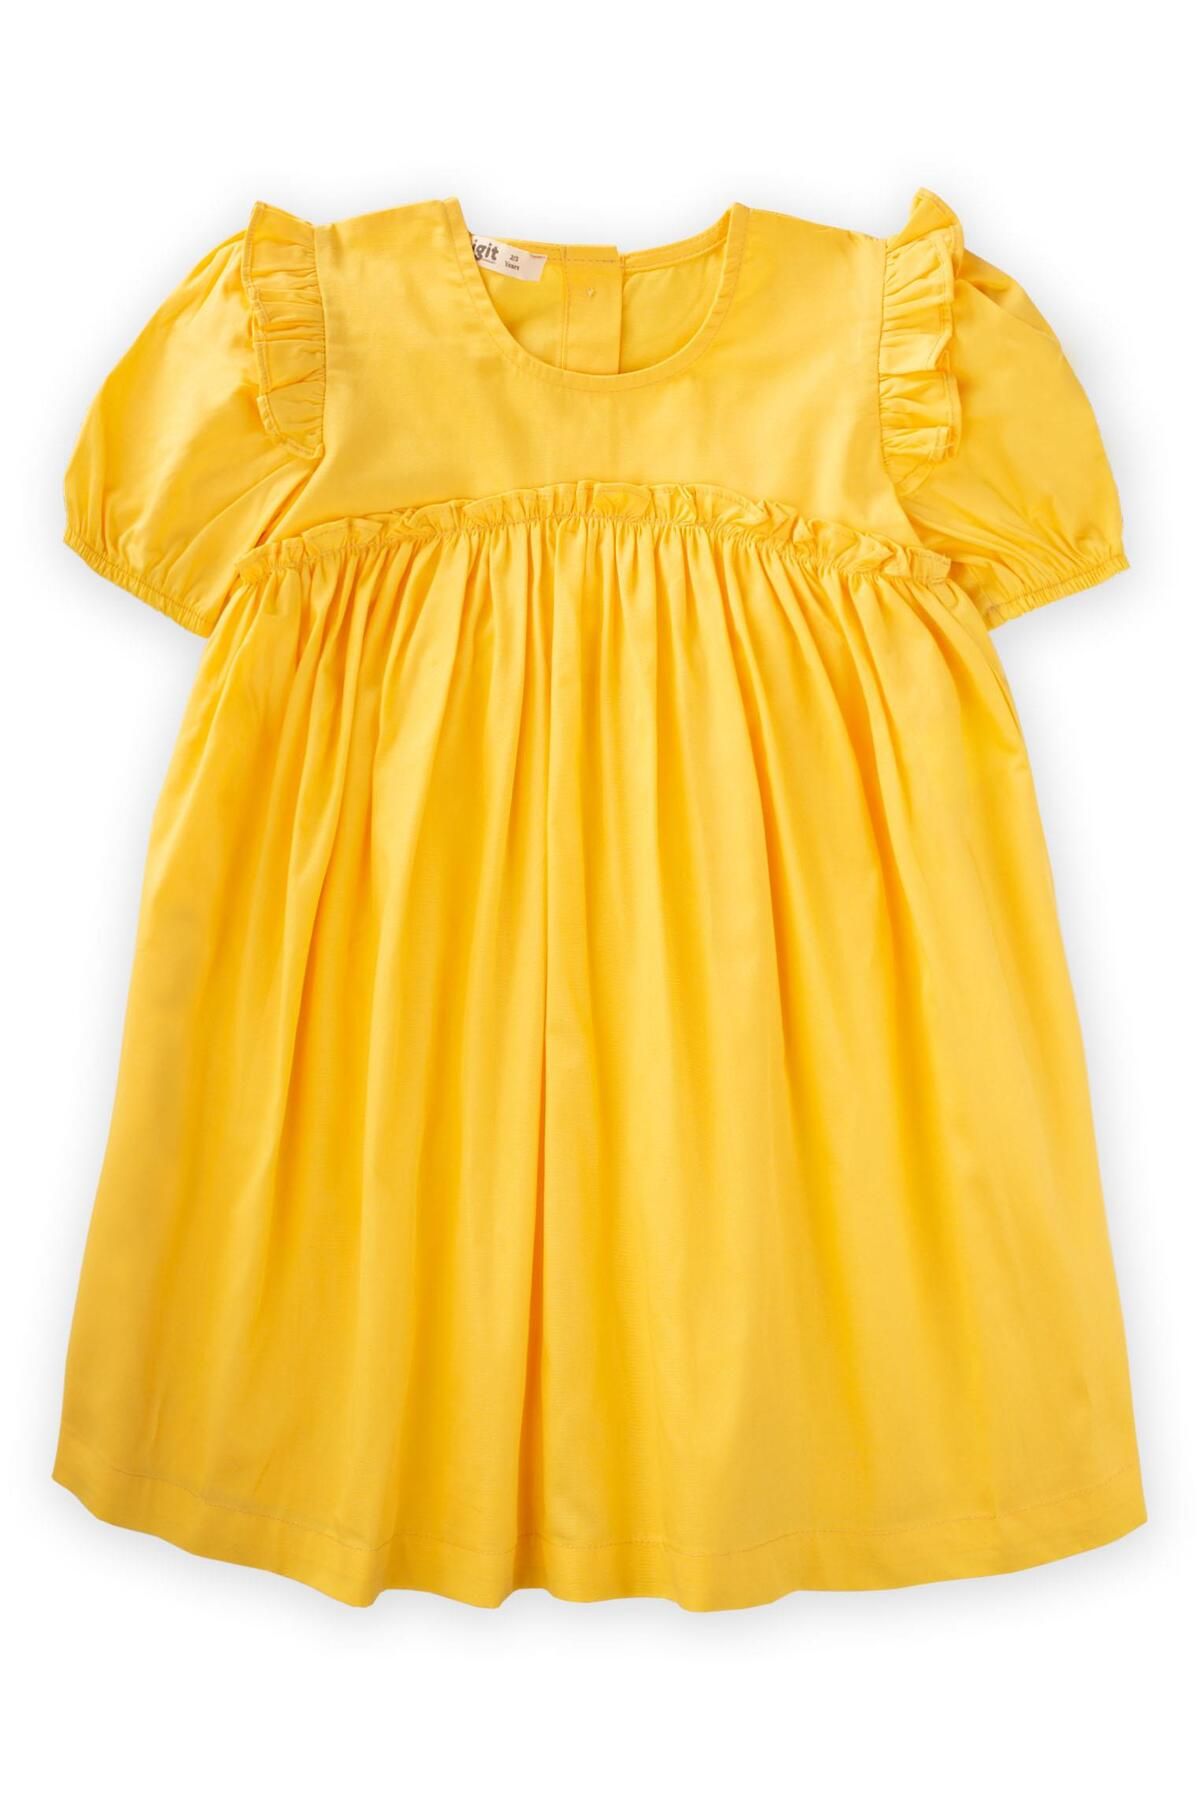 Cigit Robadan Fırfır Büzgülü Poplin Elbise 2-7 Yaş Sarı